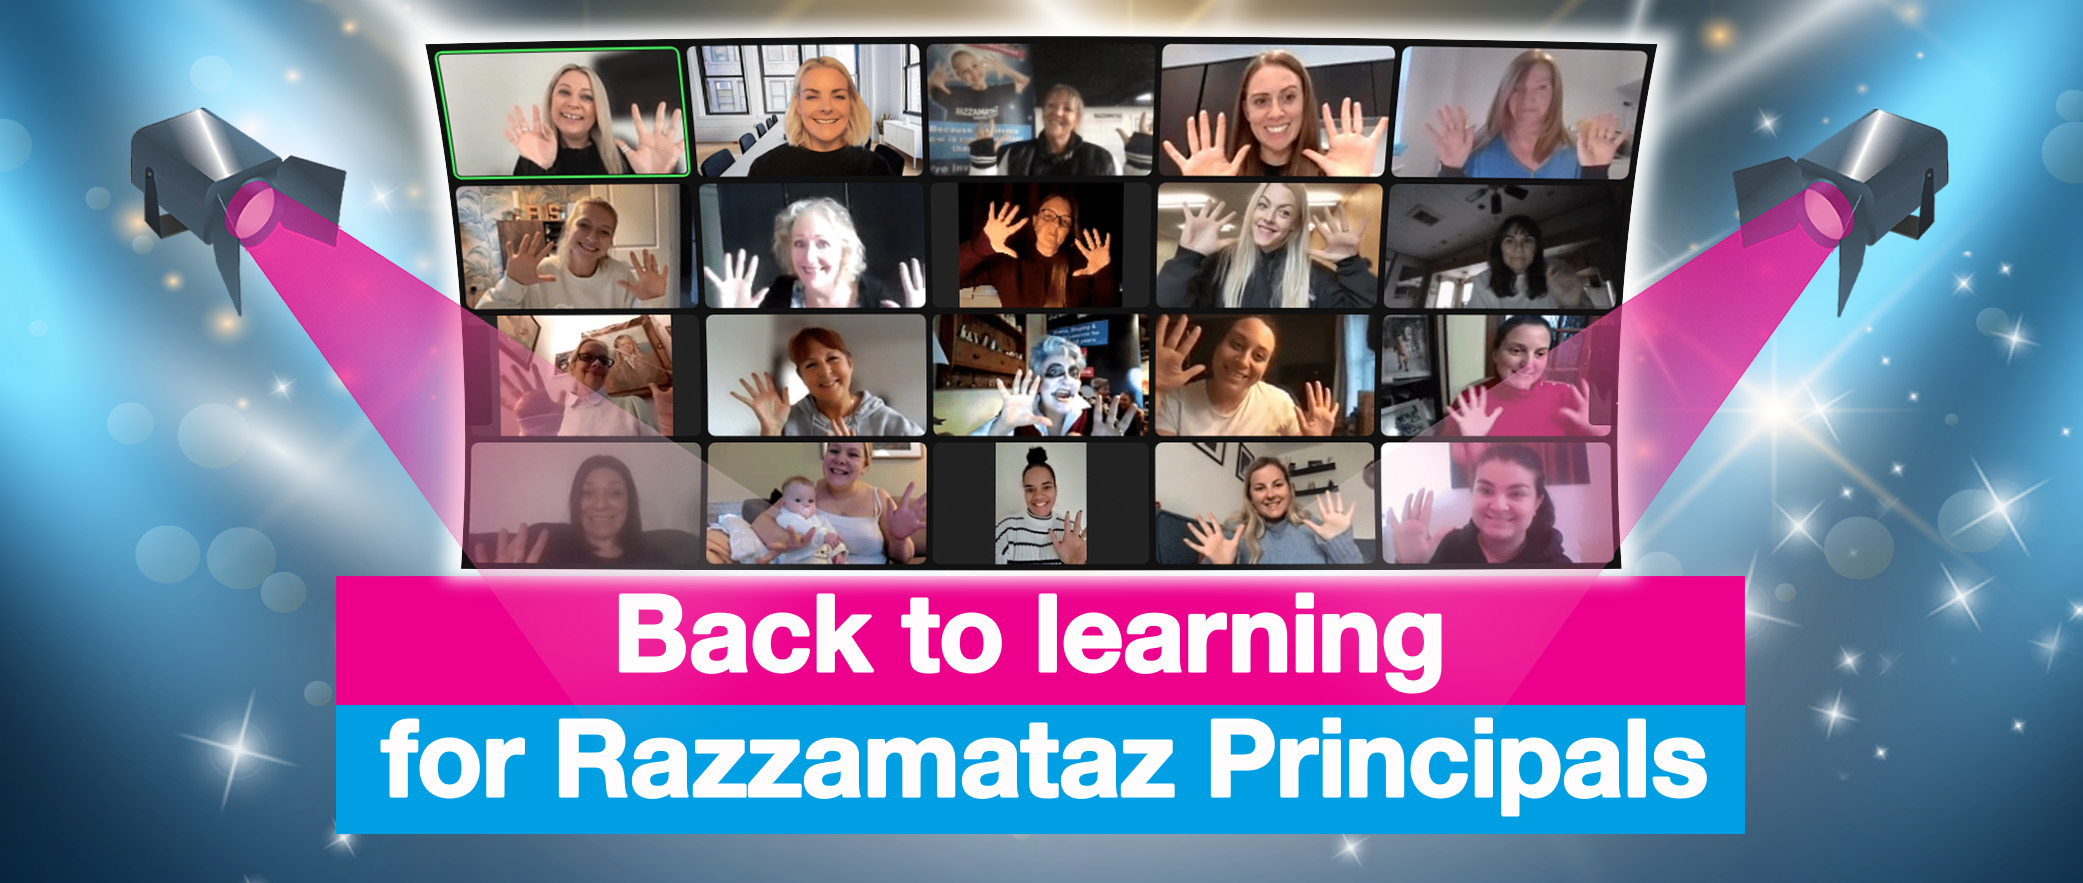 Back to Learning for Razzamataz Principles